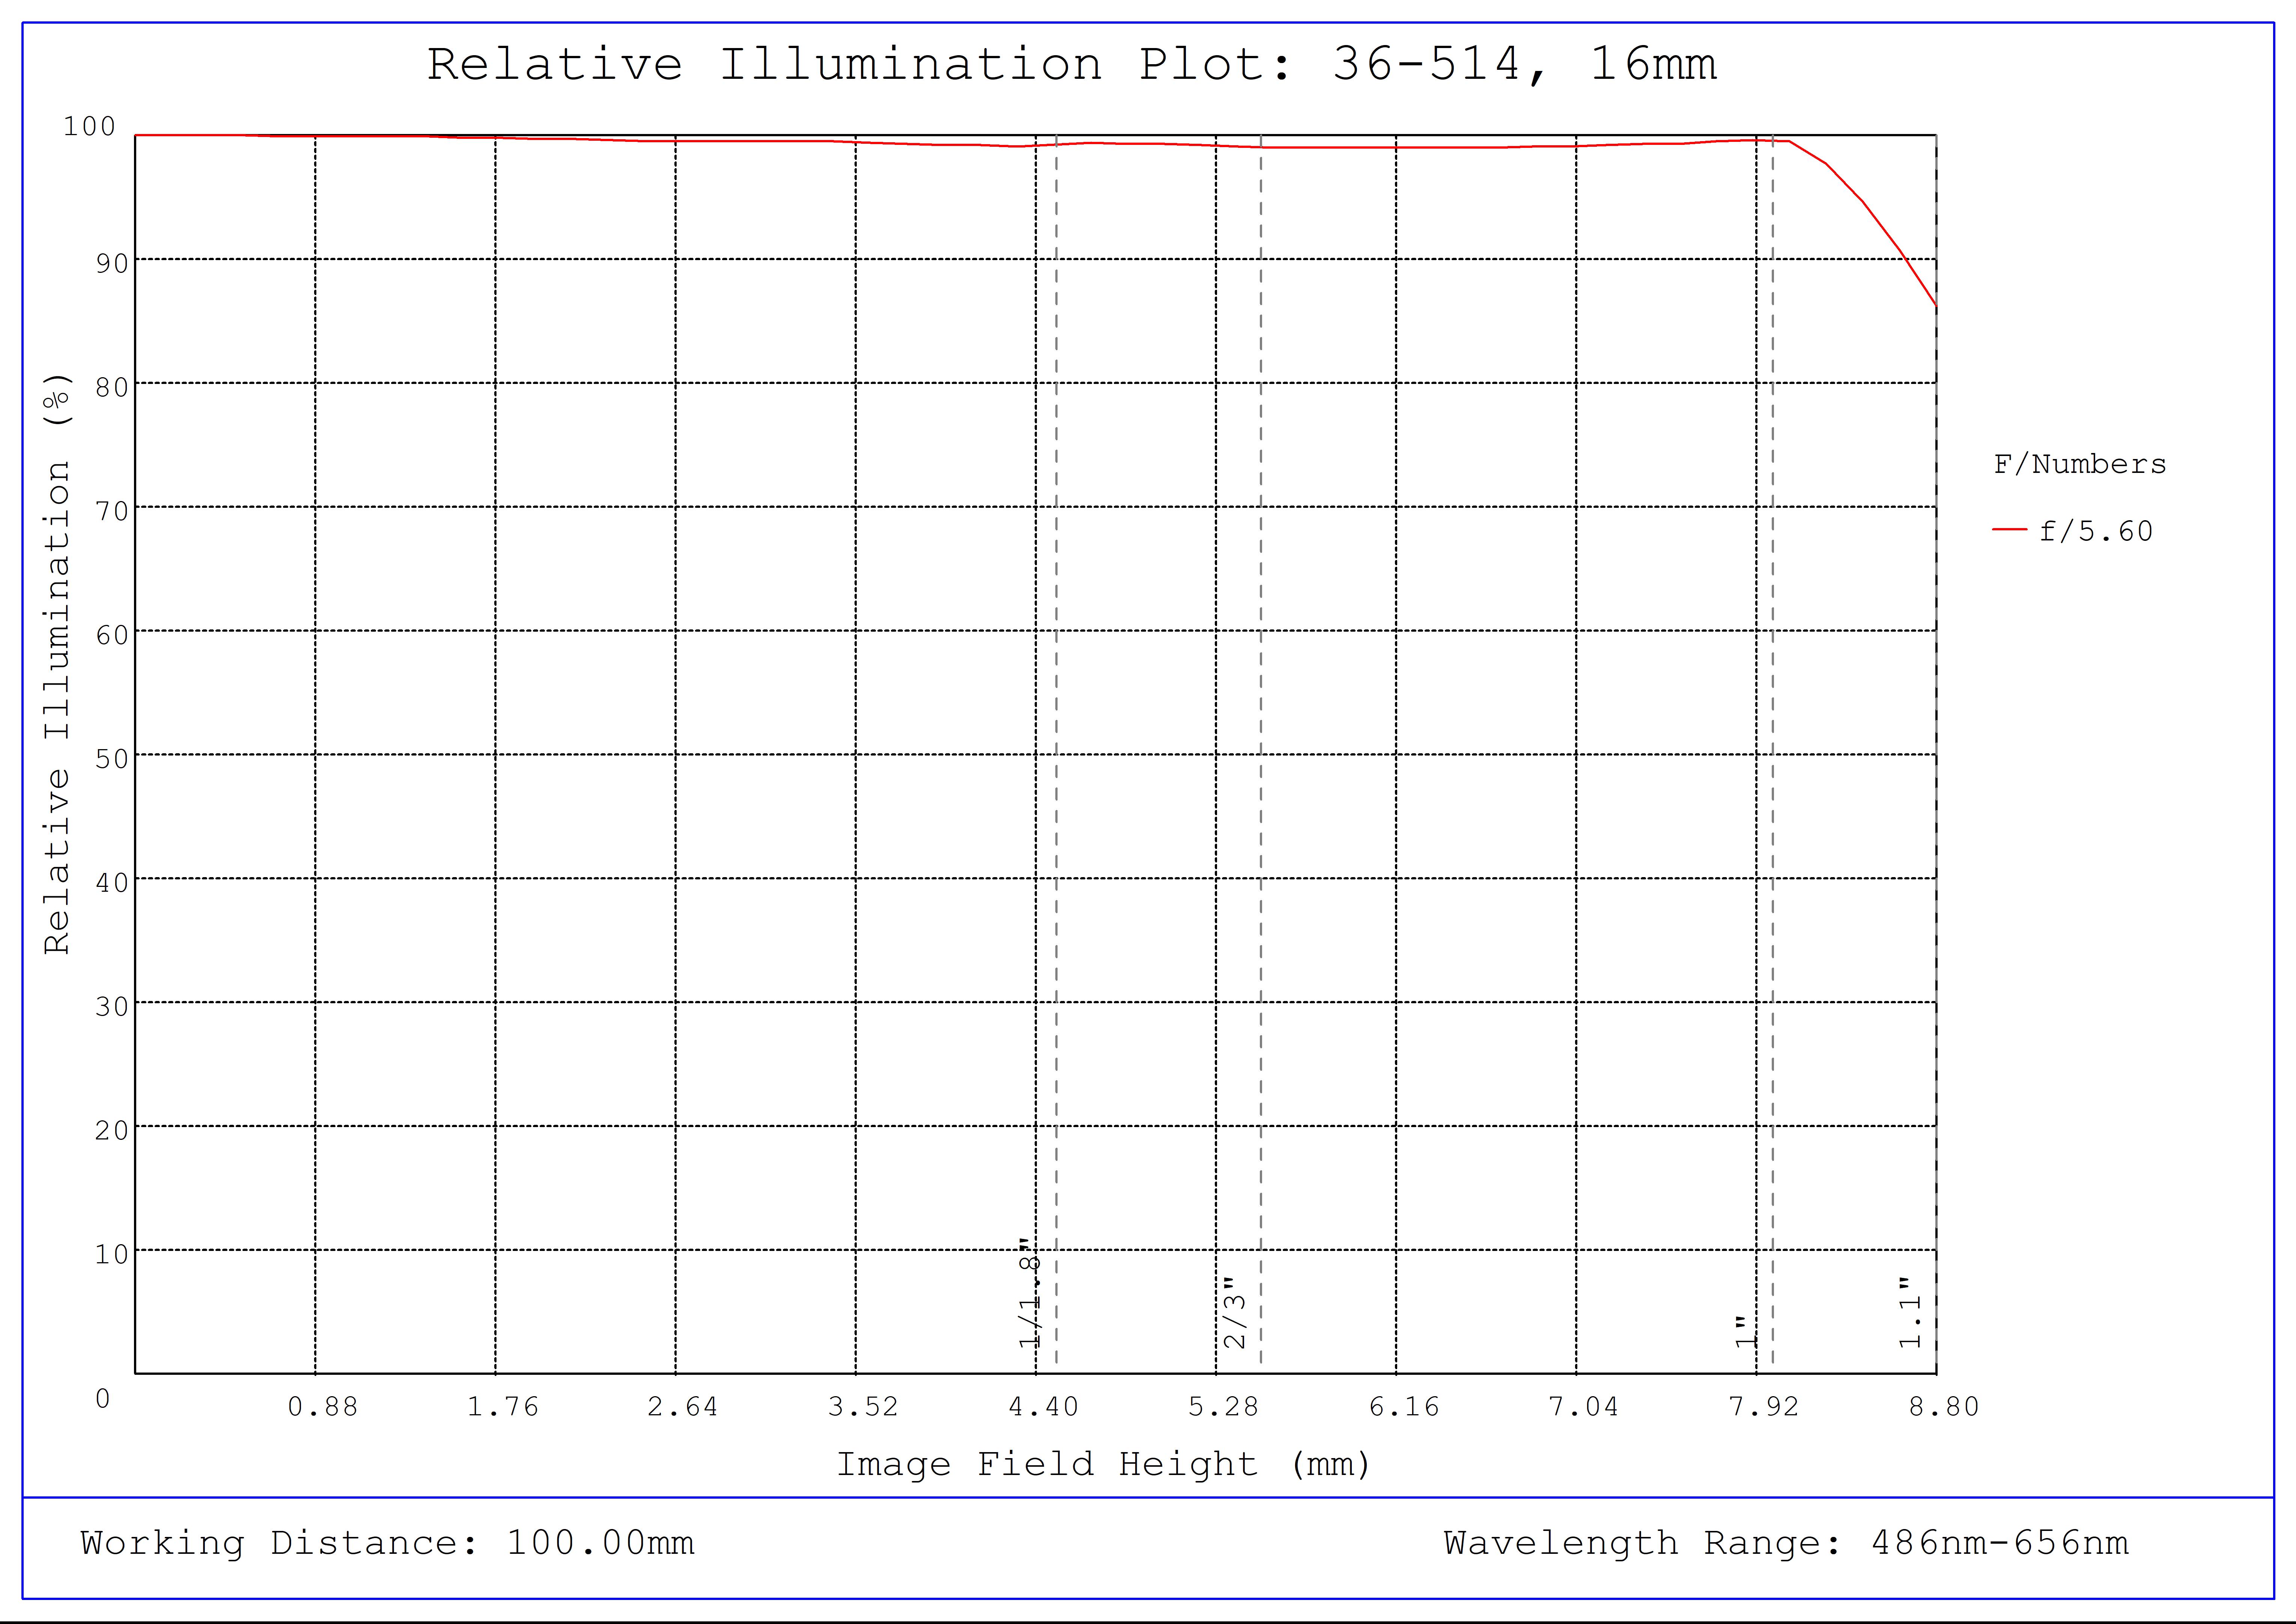 #36-514, 16mm f/5.6, HPr Series Fixed Focal Length Lens, Relative Illumination Plot